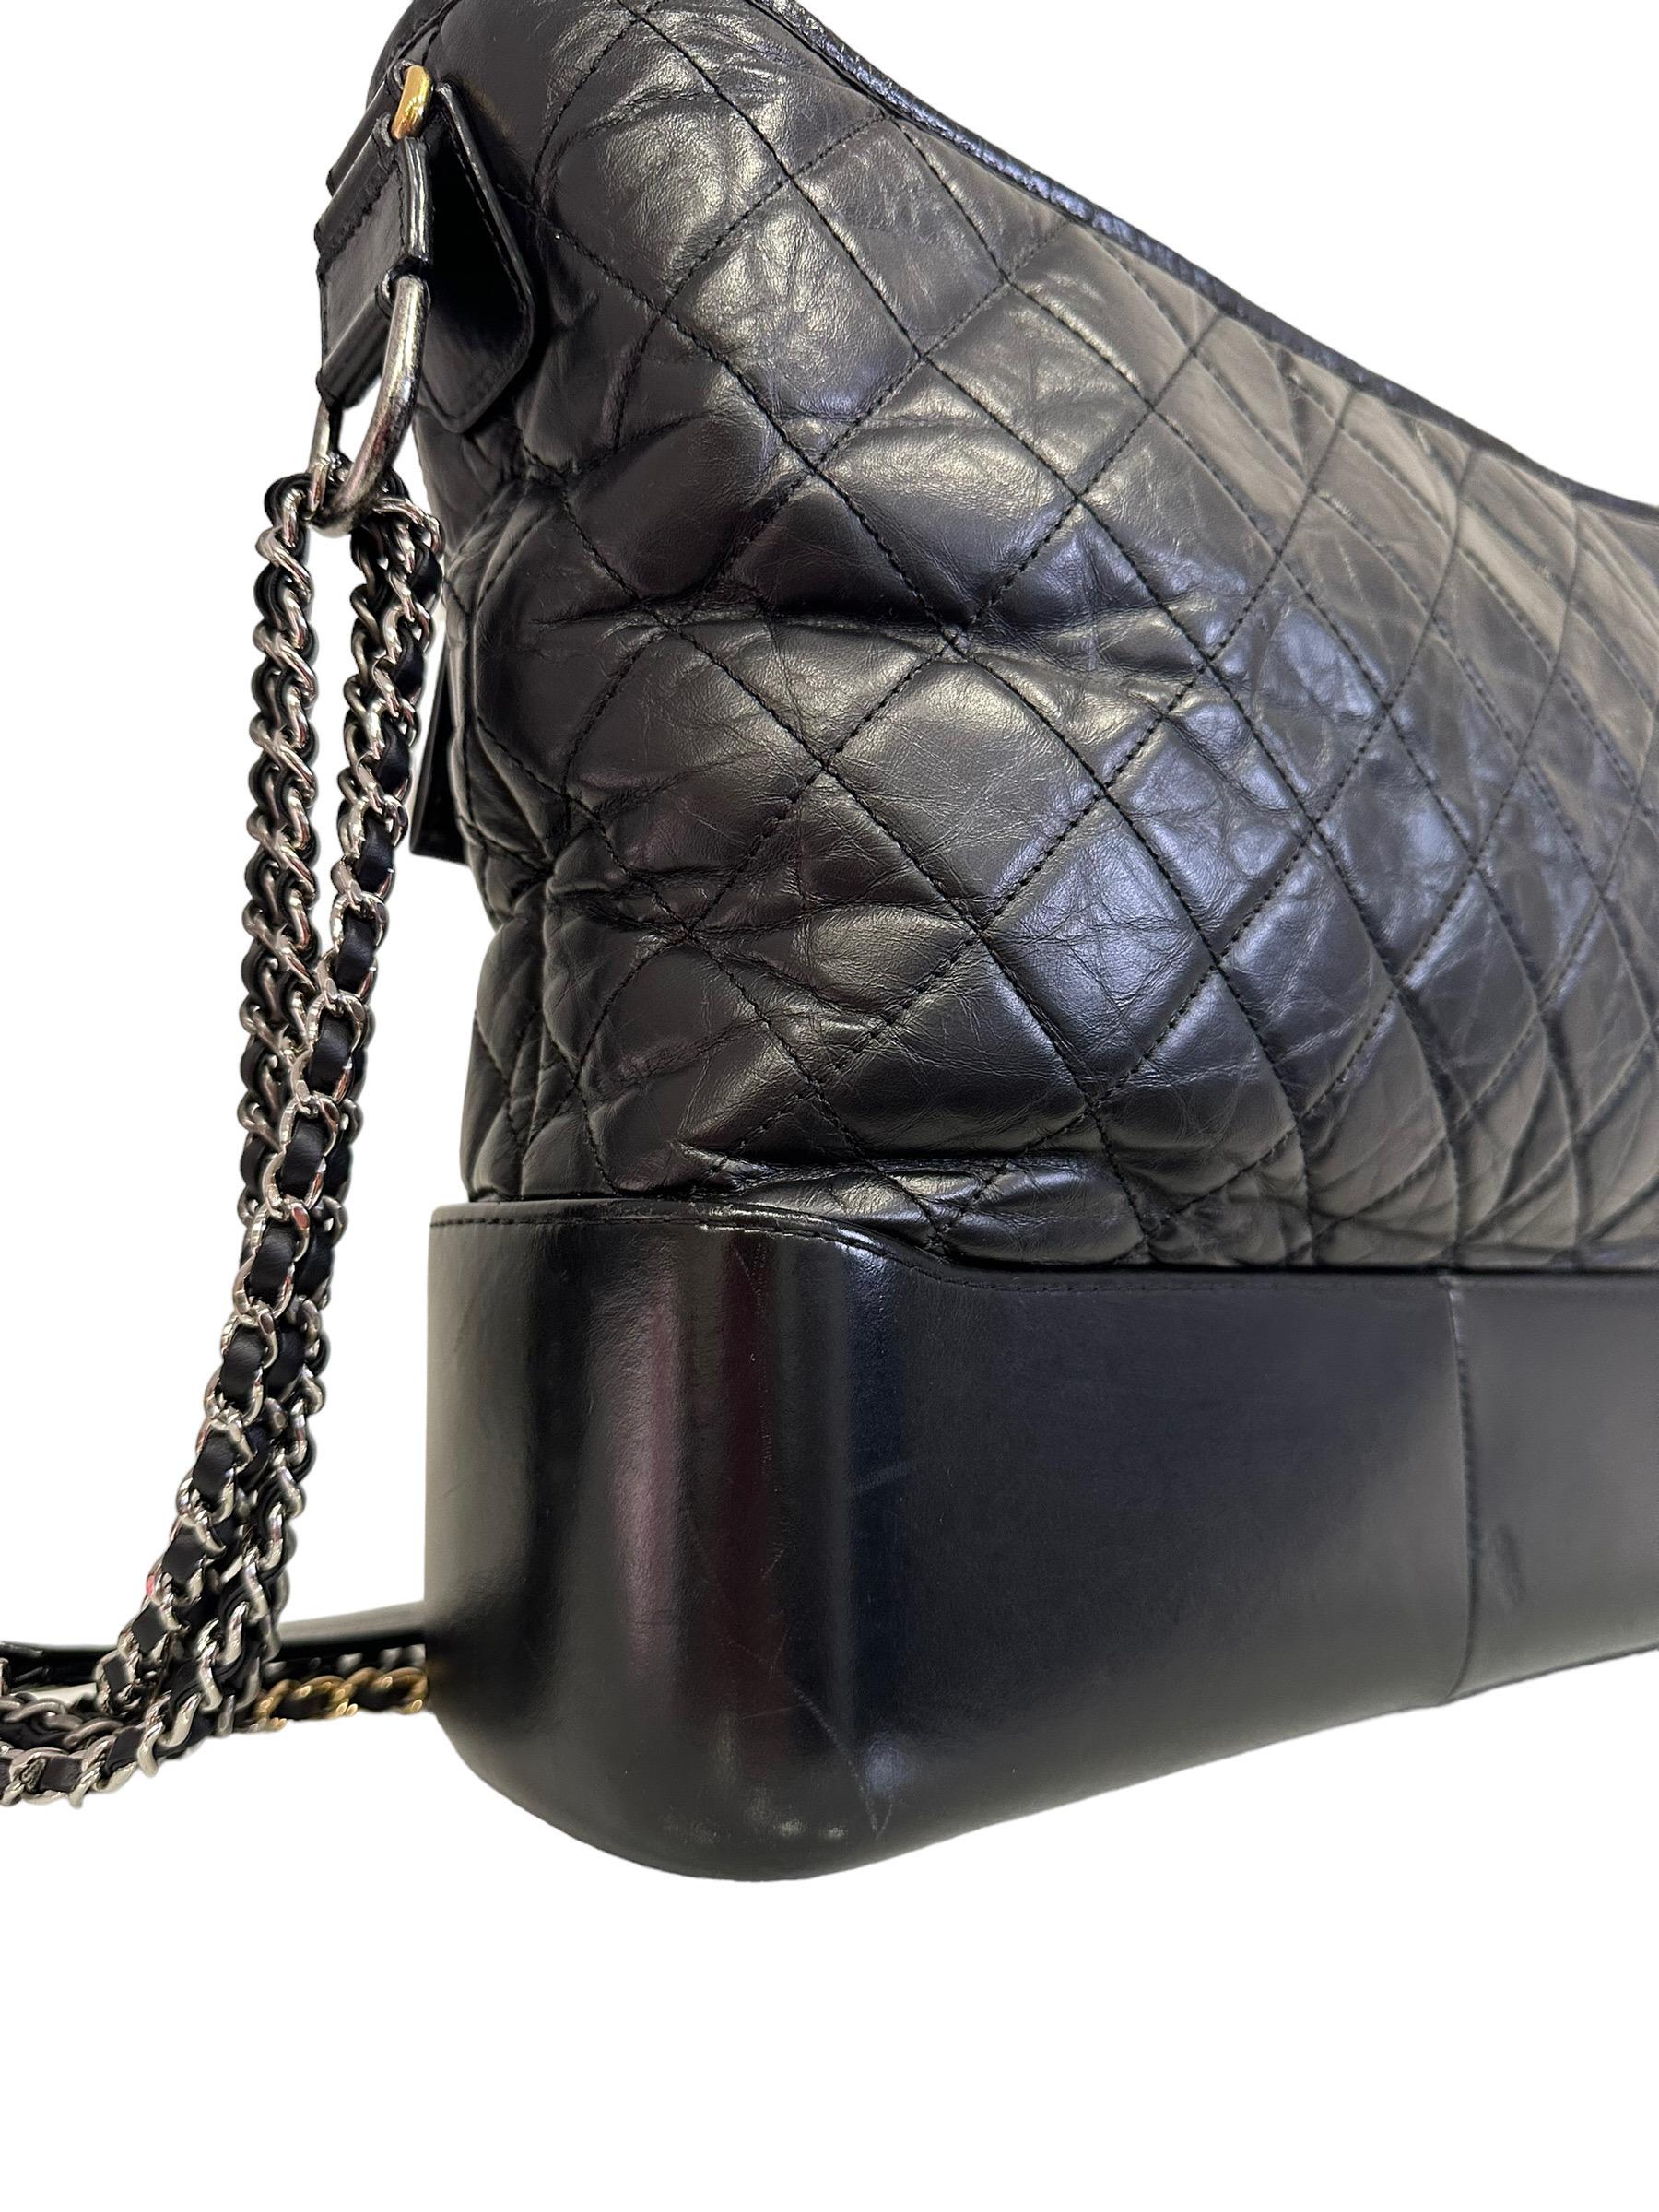 2018 Chanel Gabrielle Maxi Black Leather Top Shoulder Bag For Sale 7